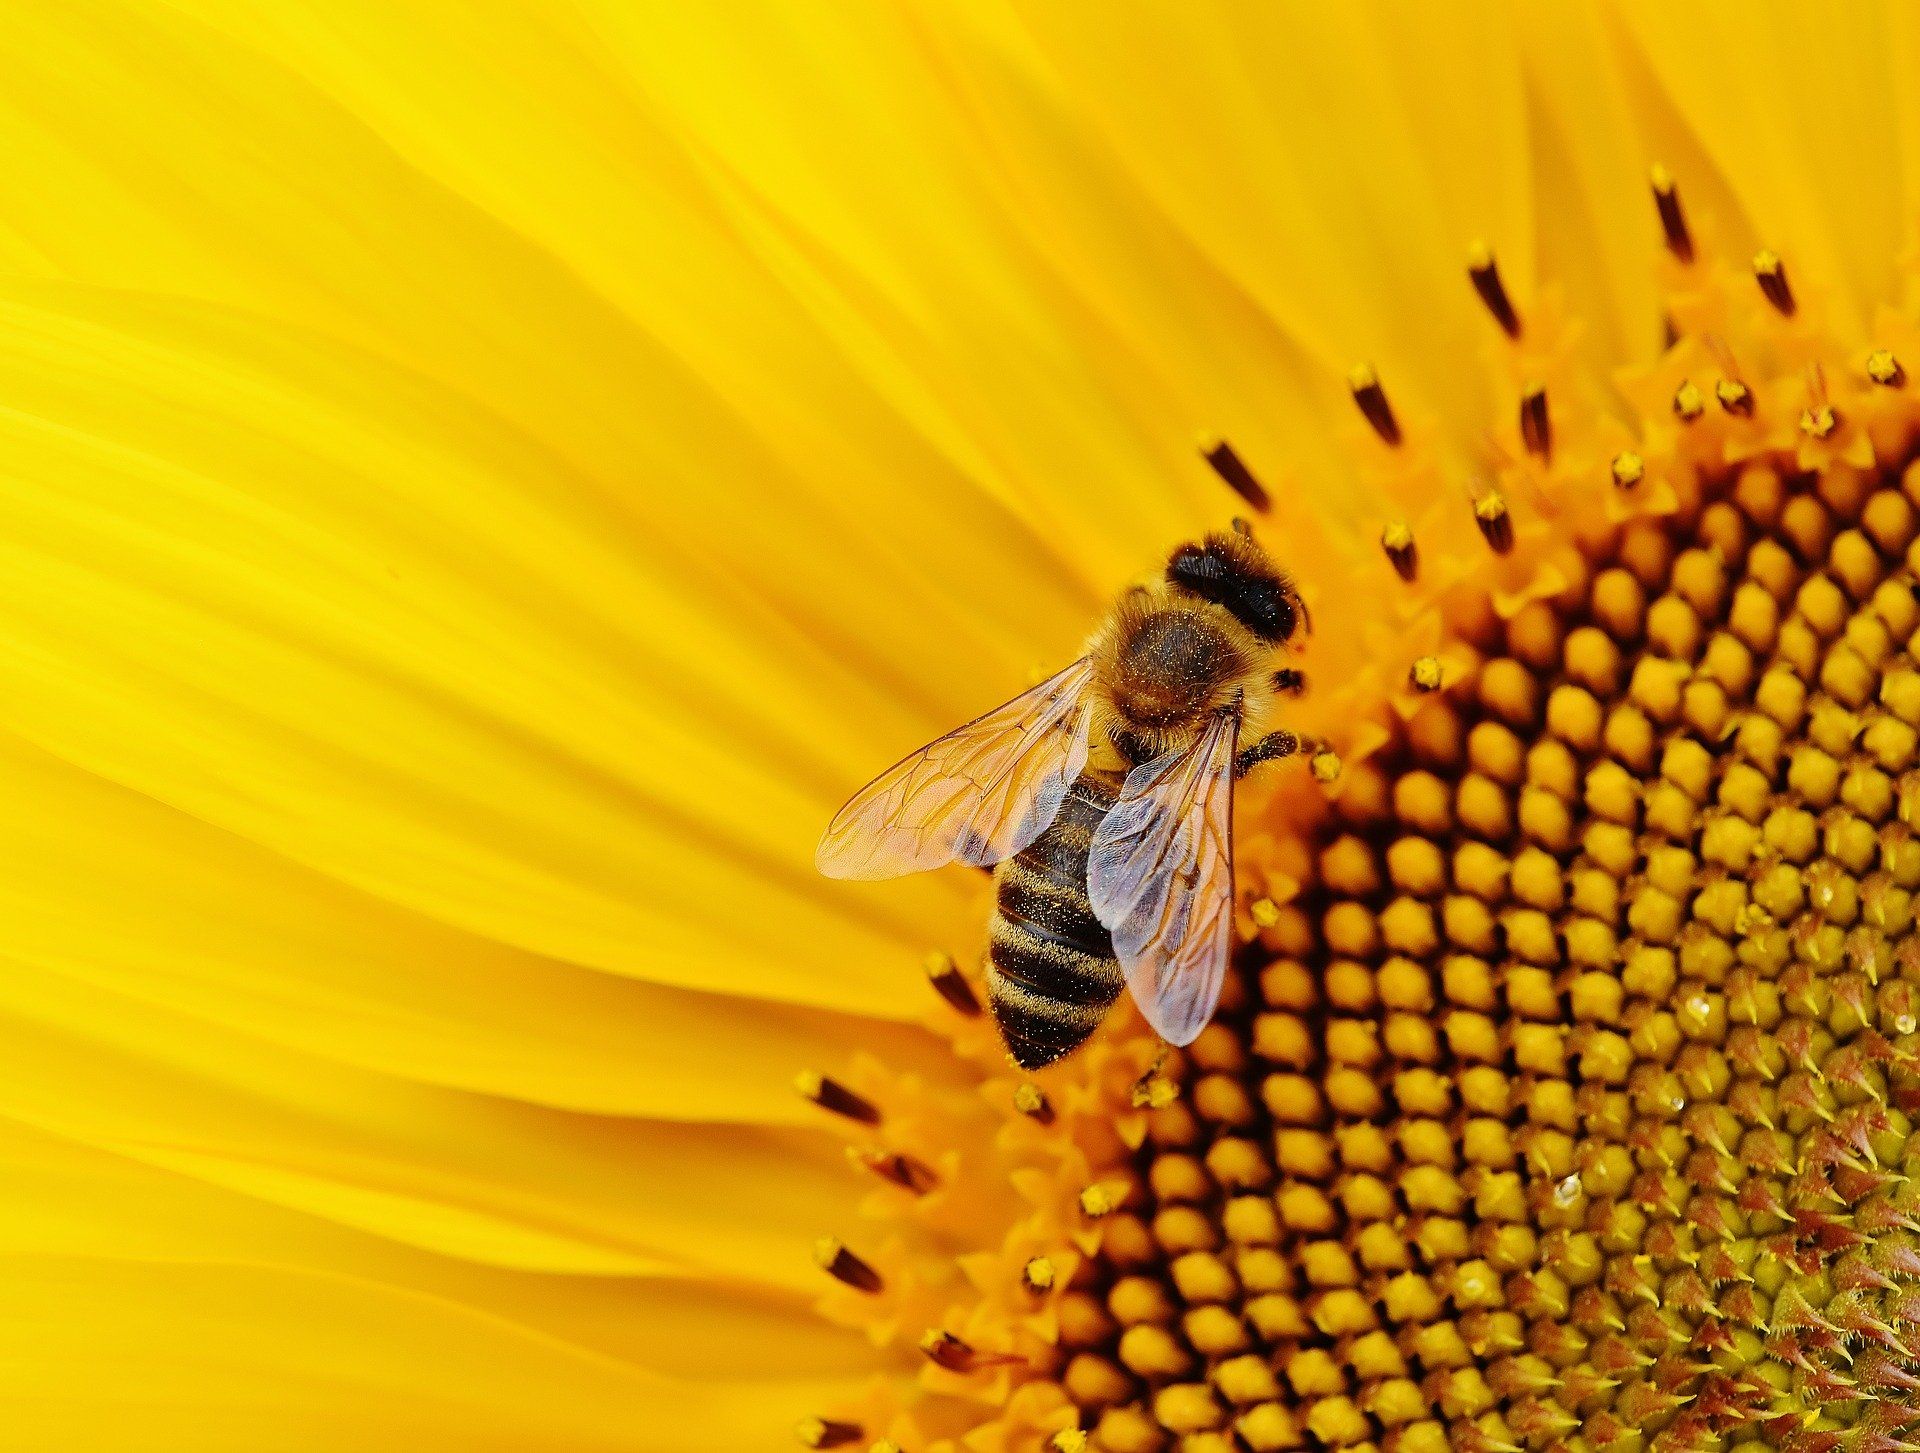 Смотреть фото пчелы онлайн